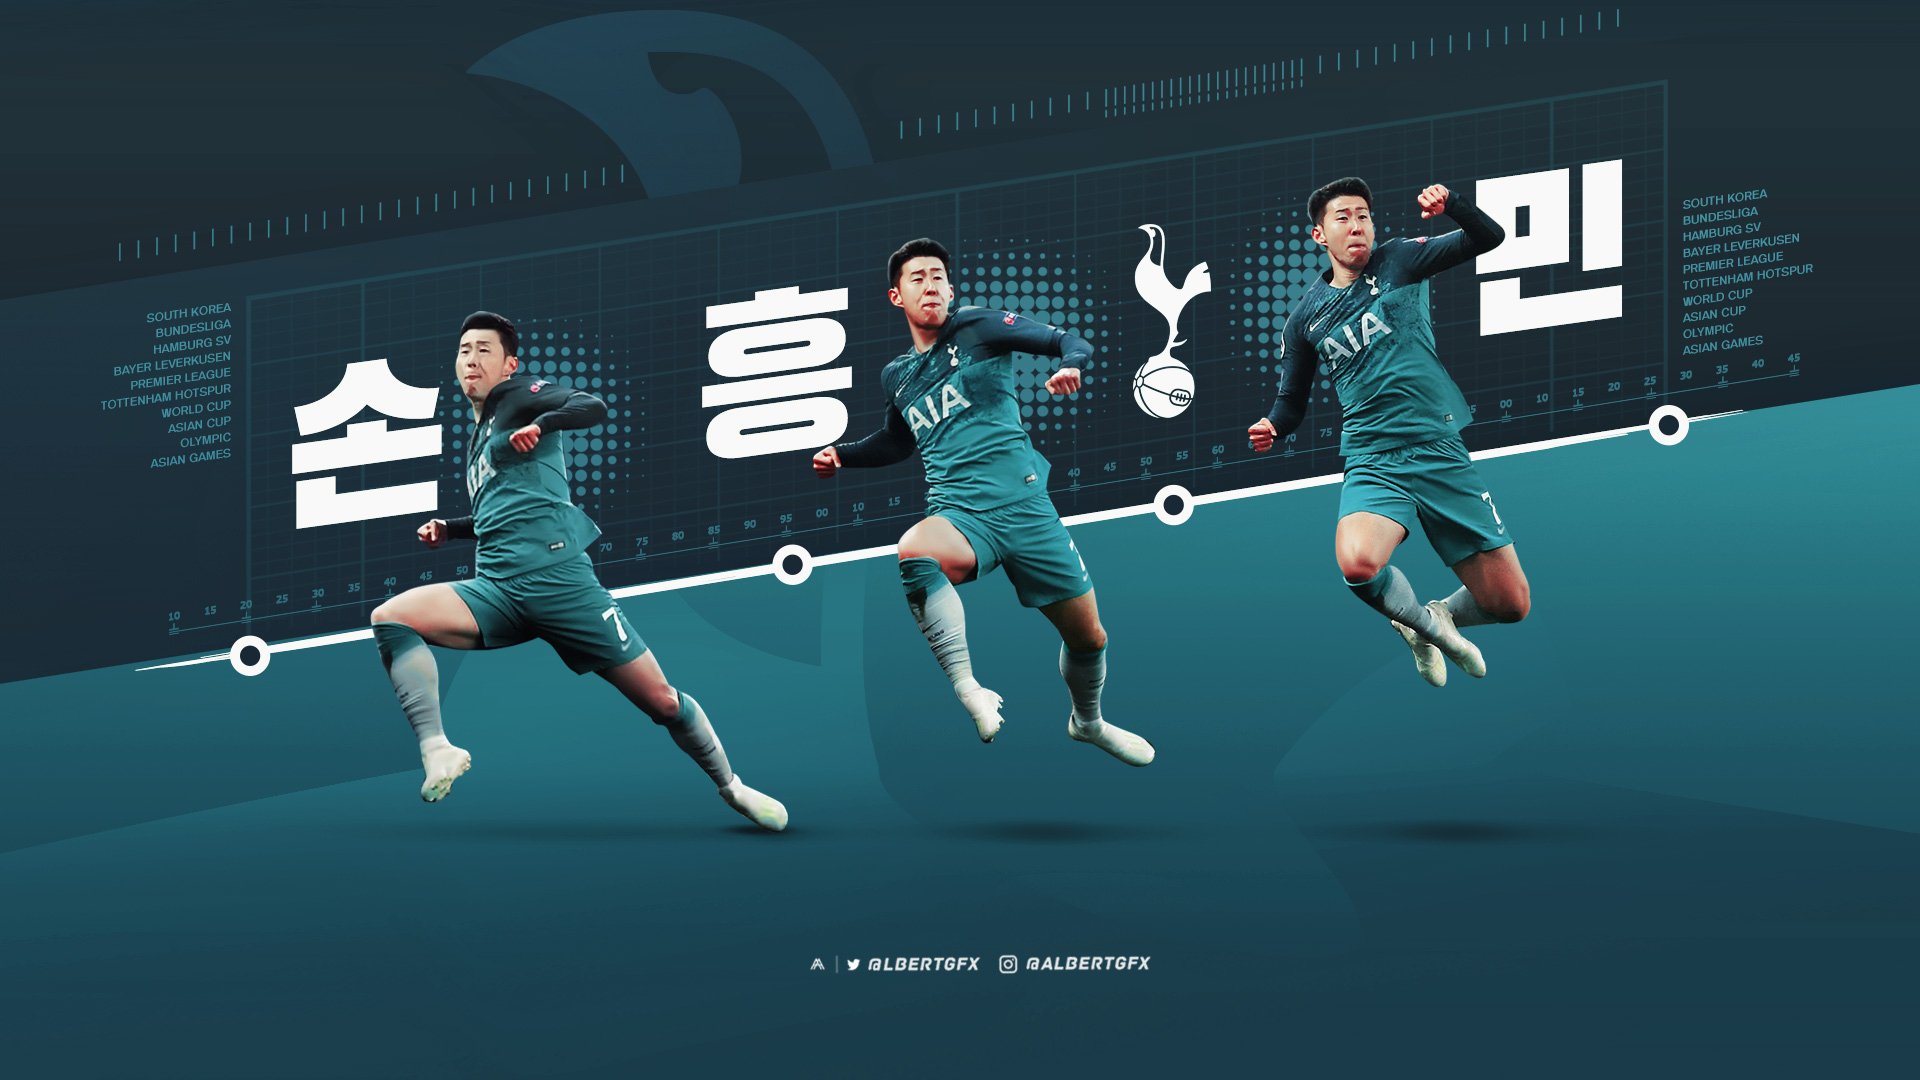 Son Heung-min Wallpaper.  Football players images, Football